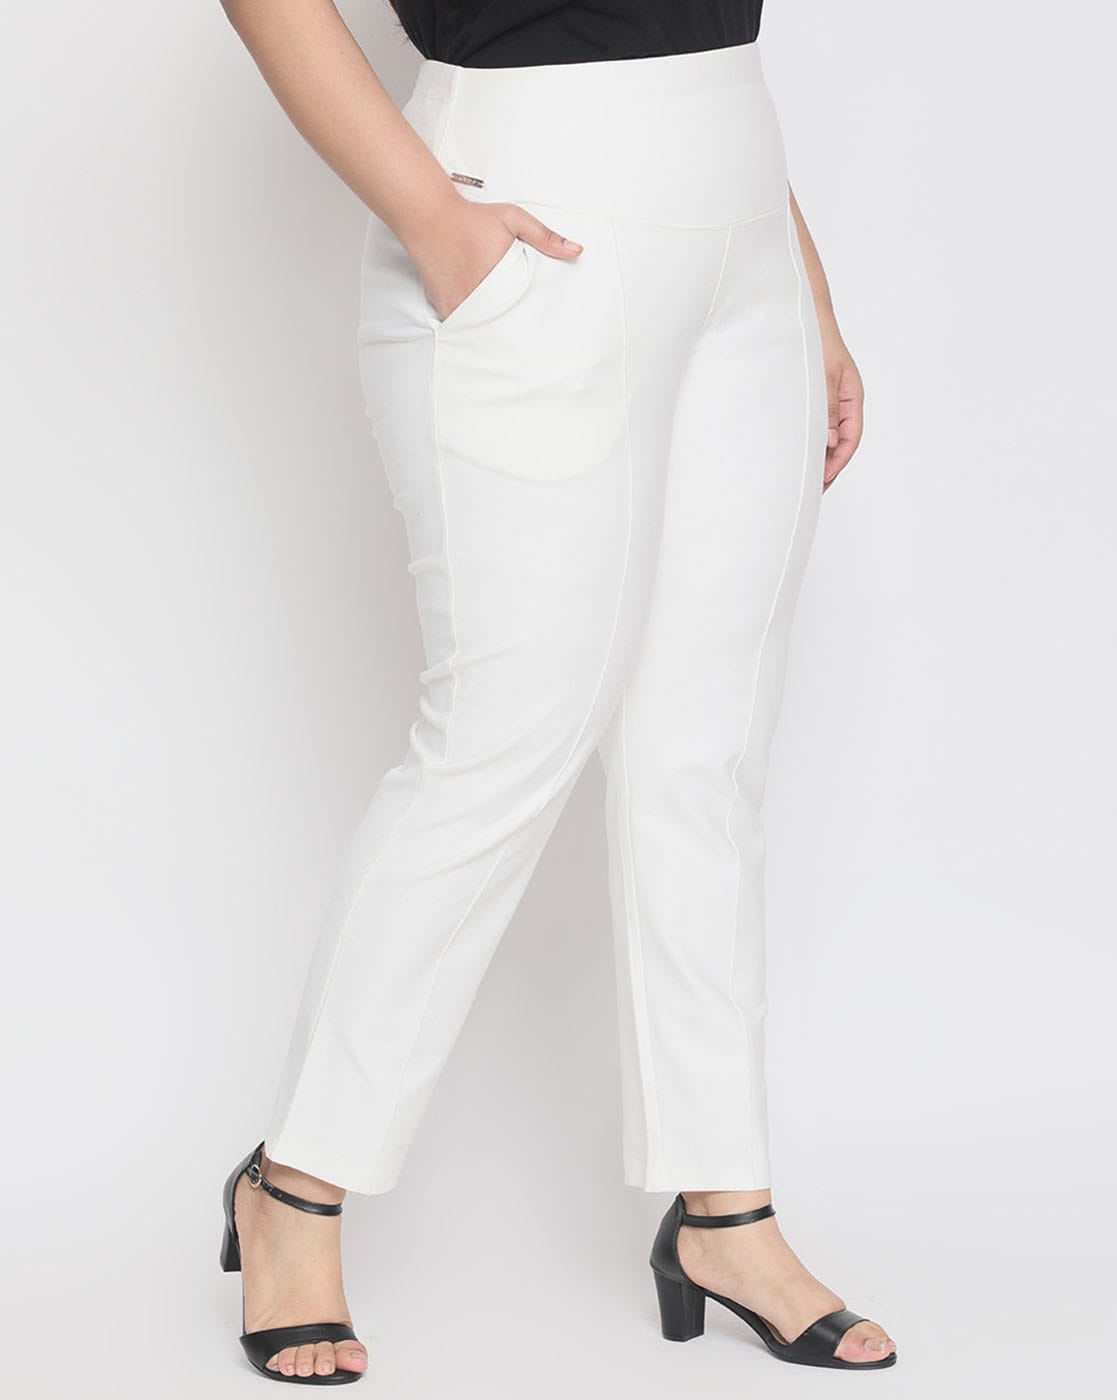 Buy White Cotton Flax Women Trousers Online - Aurelia